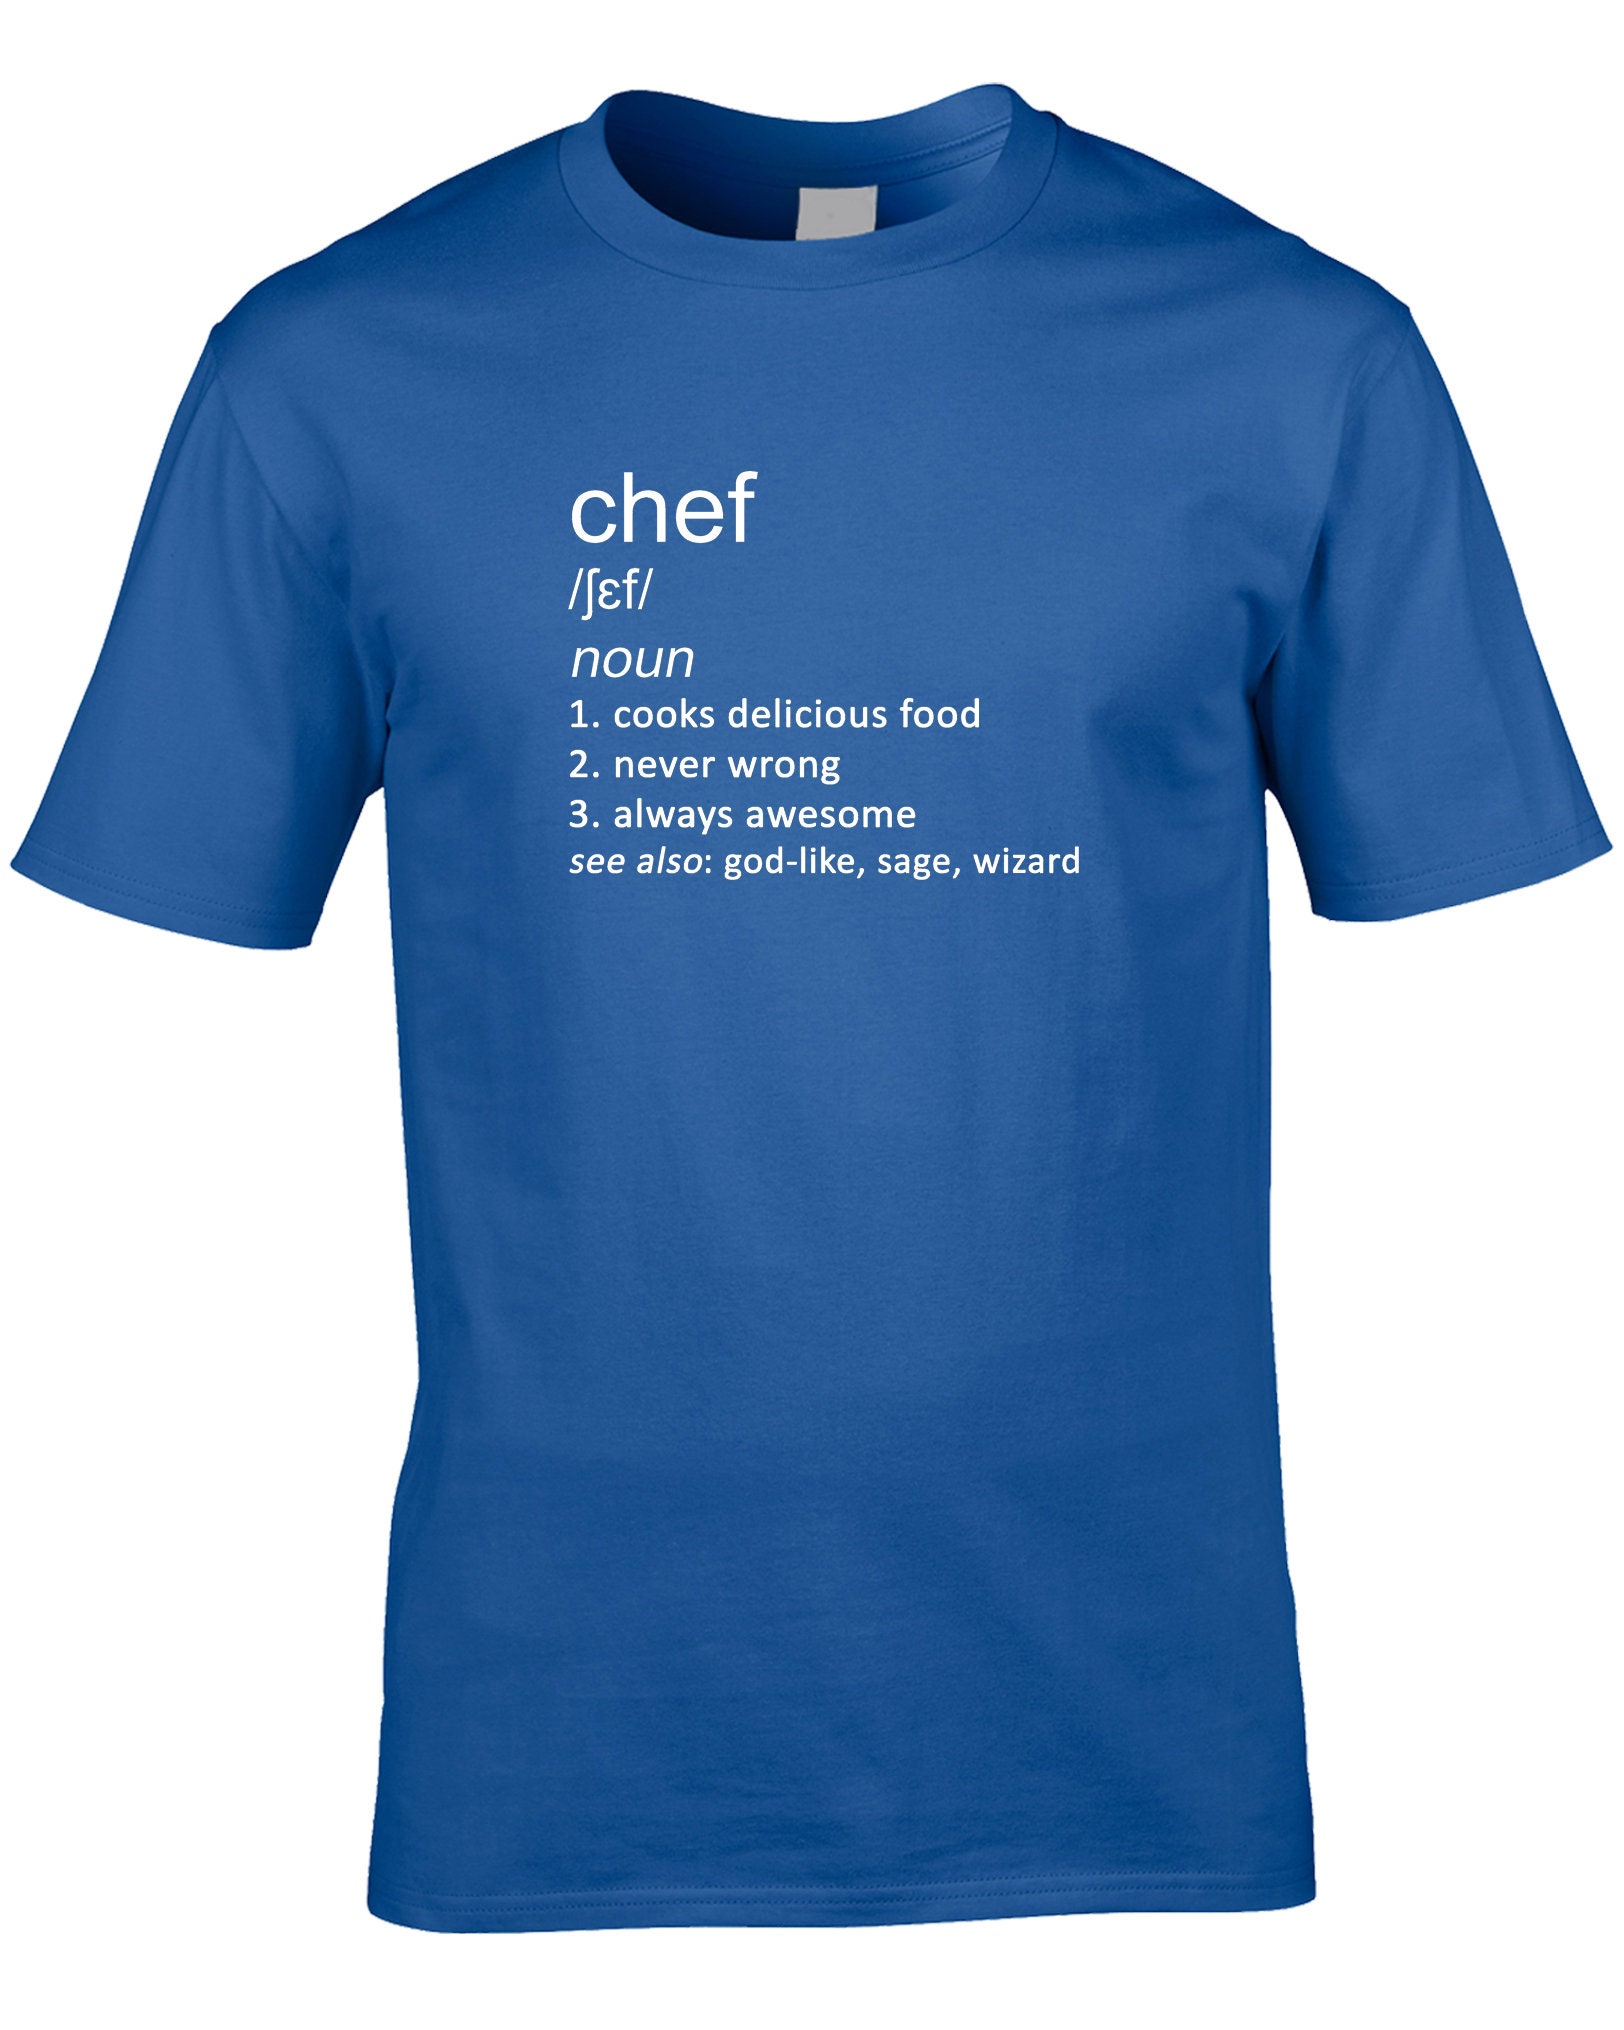 Culinary Gangster Professional Head Cook Gift Idea' Men's T-Shirt